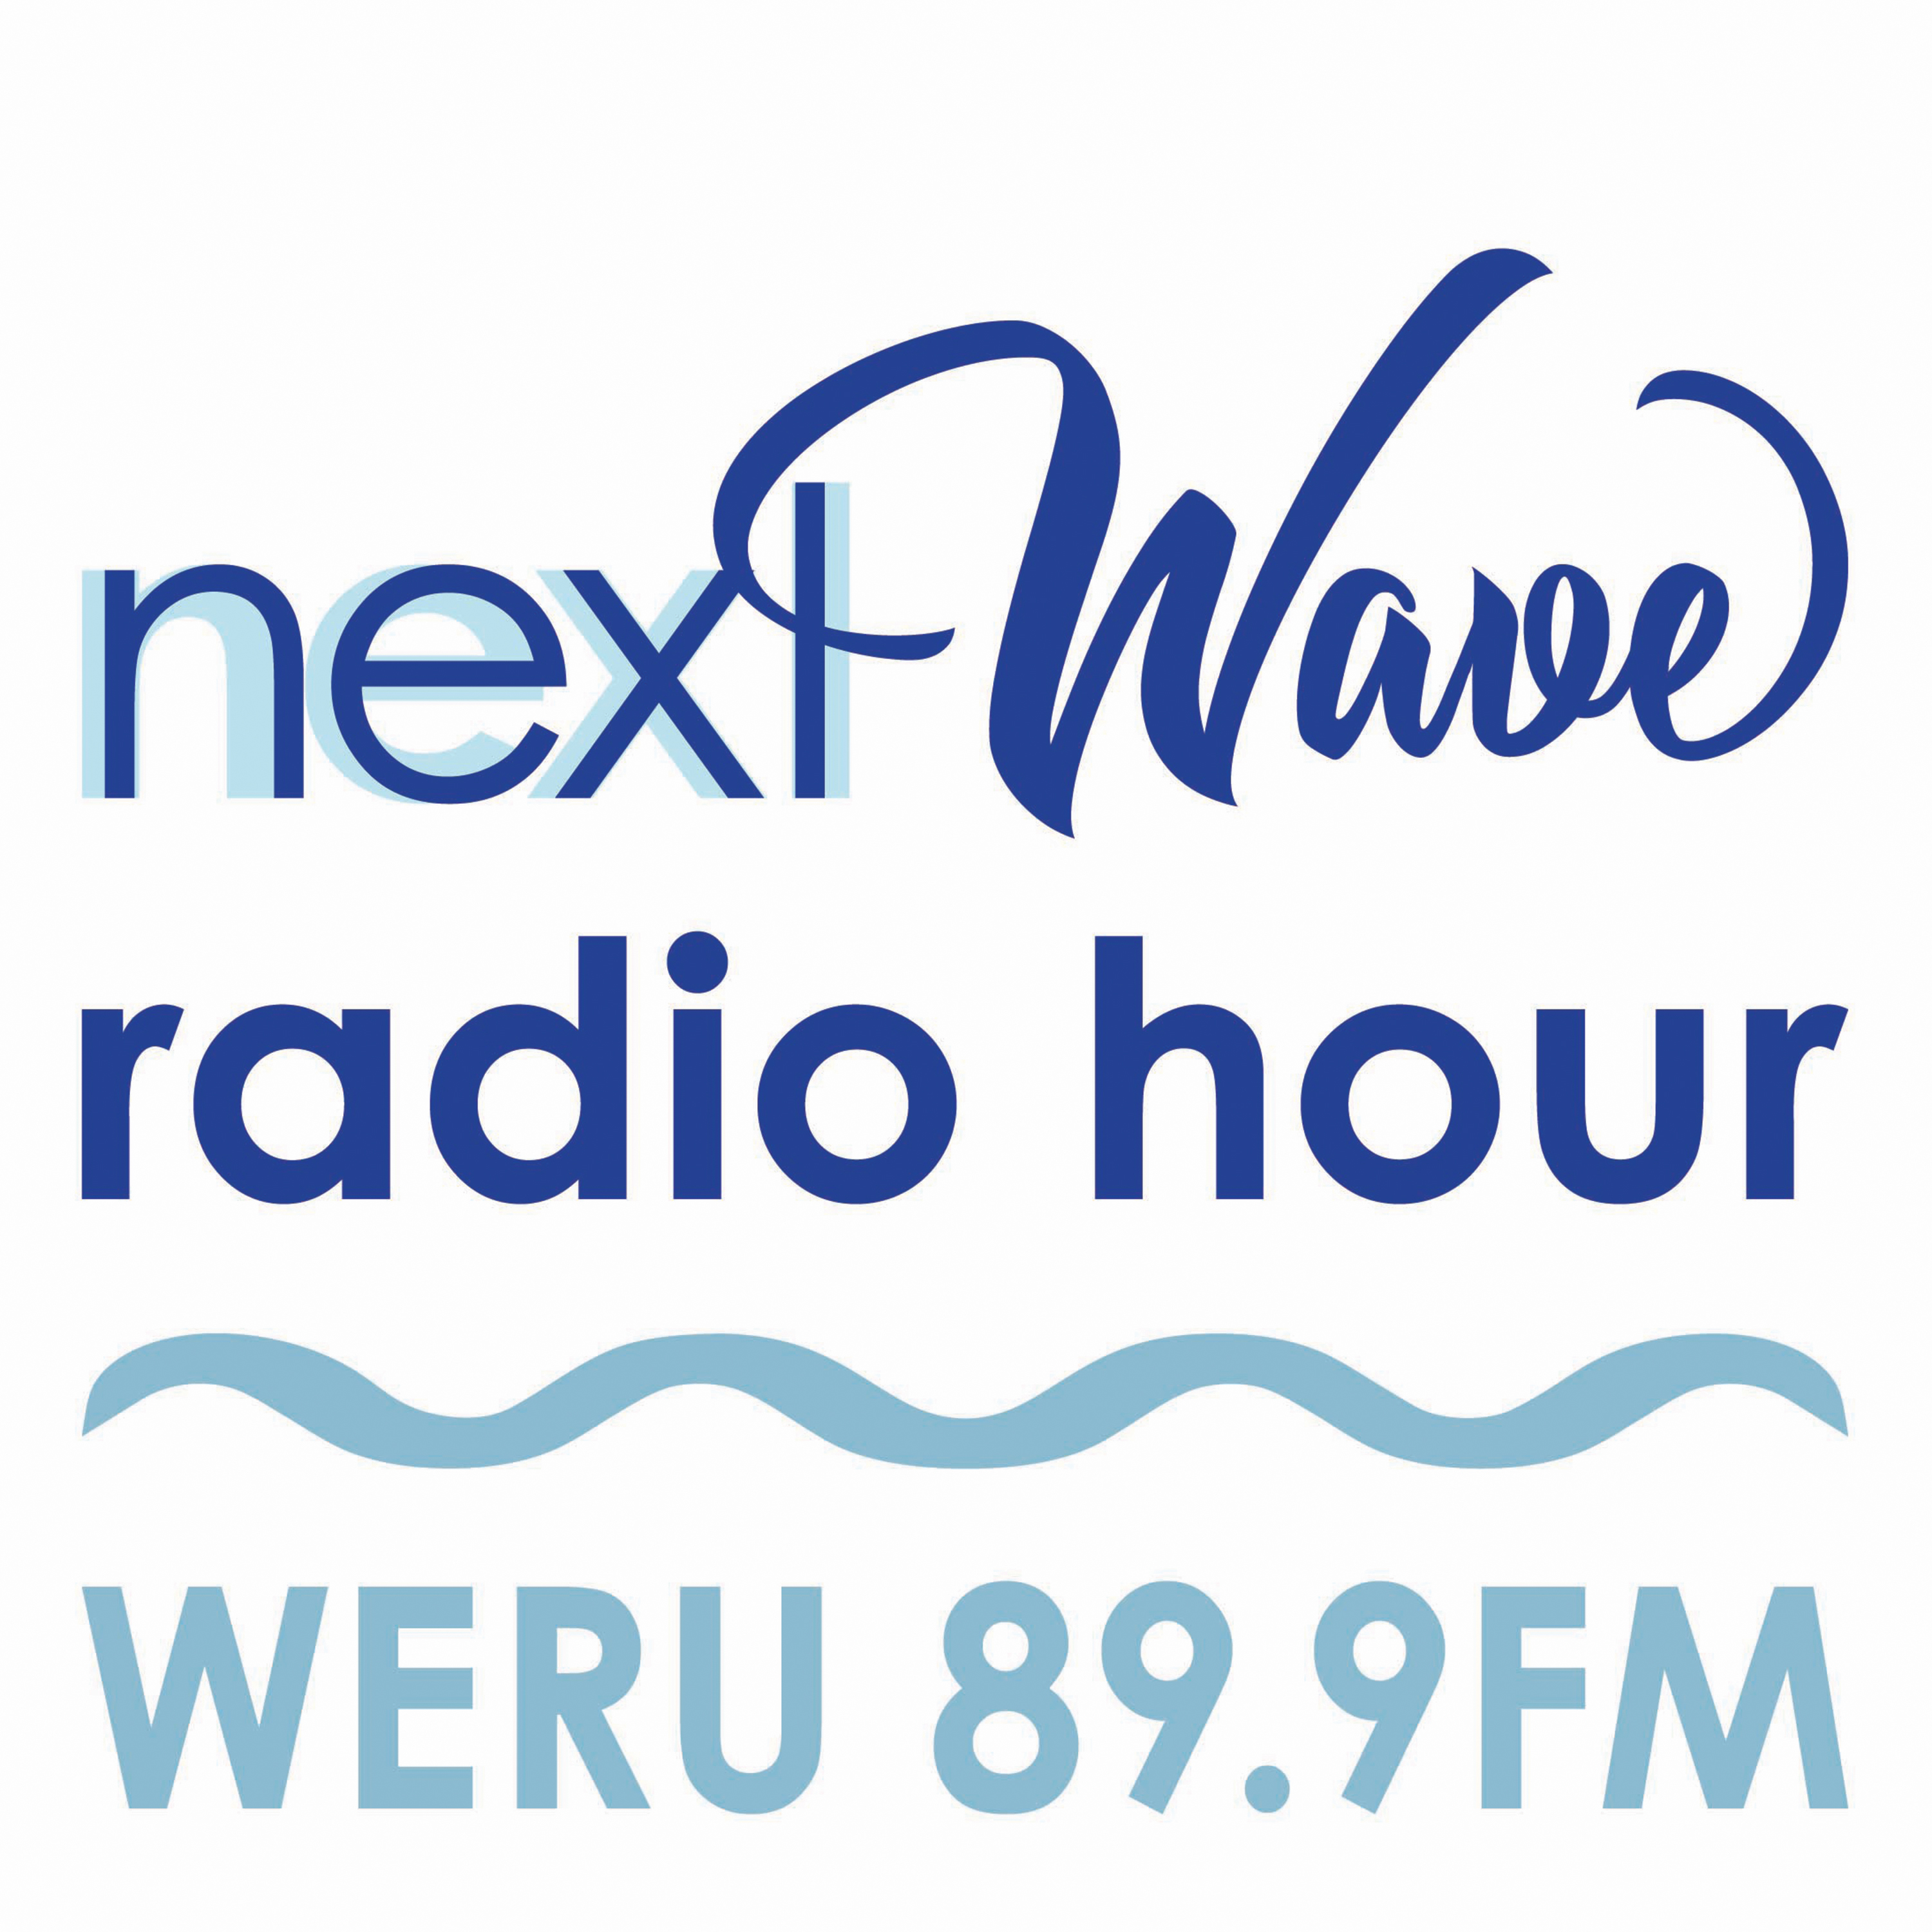 NextWave Radio Hour | WERU 89.9 FM Blue Hill, Maine Local News and Public Affairs Archives